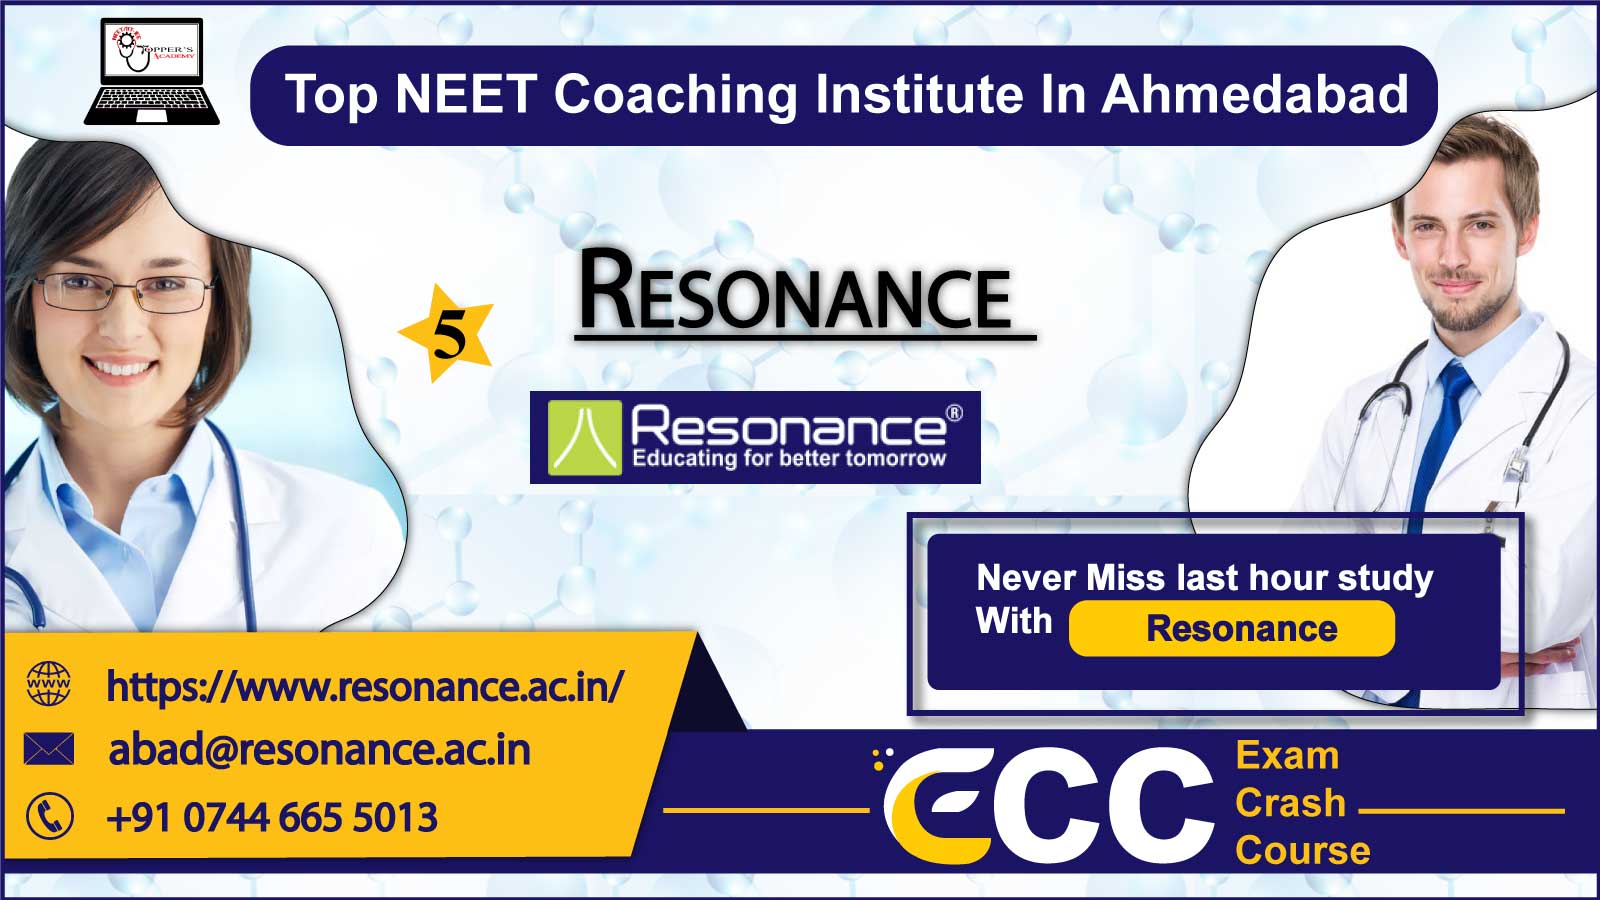 Resonance NEET Coaching In Ahmedabad